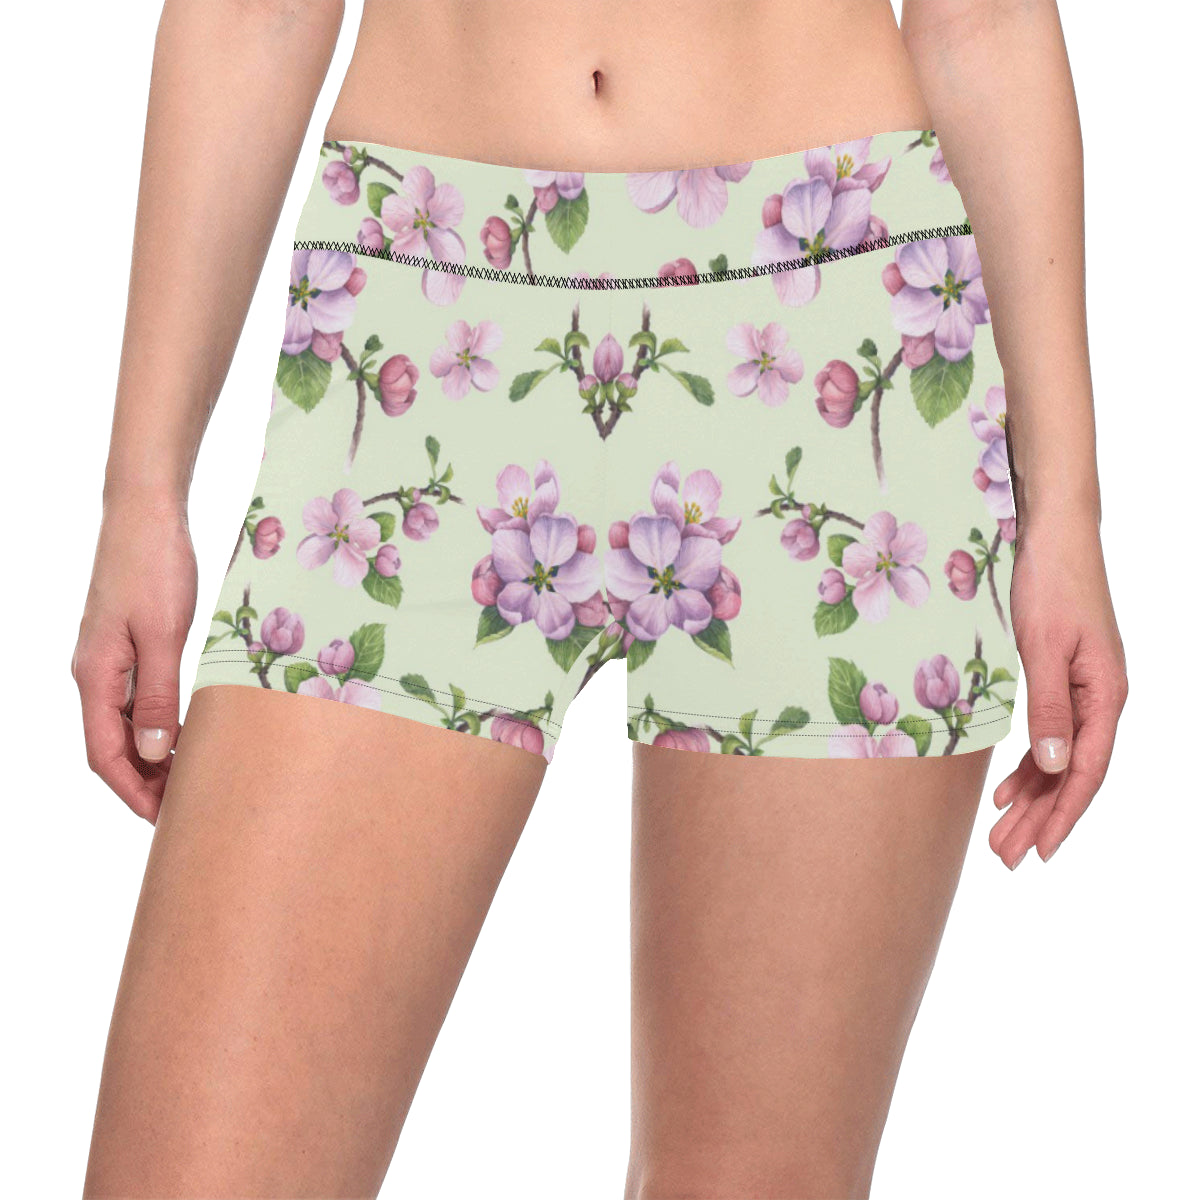 Apple blossom Pattern Print Design AB05 Yoga Shorts